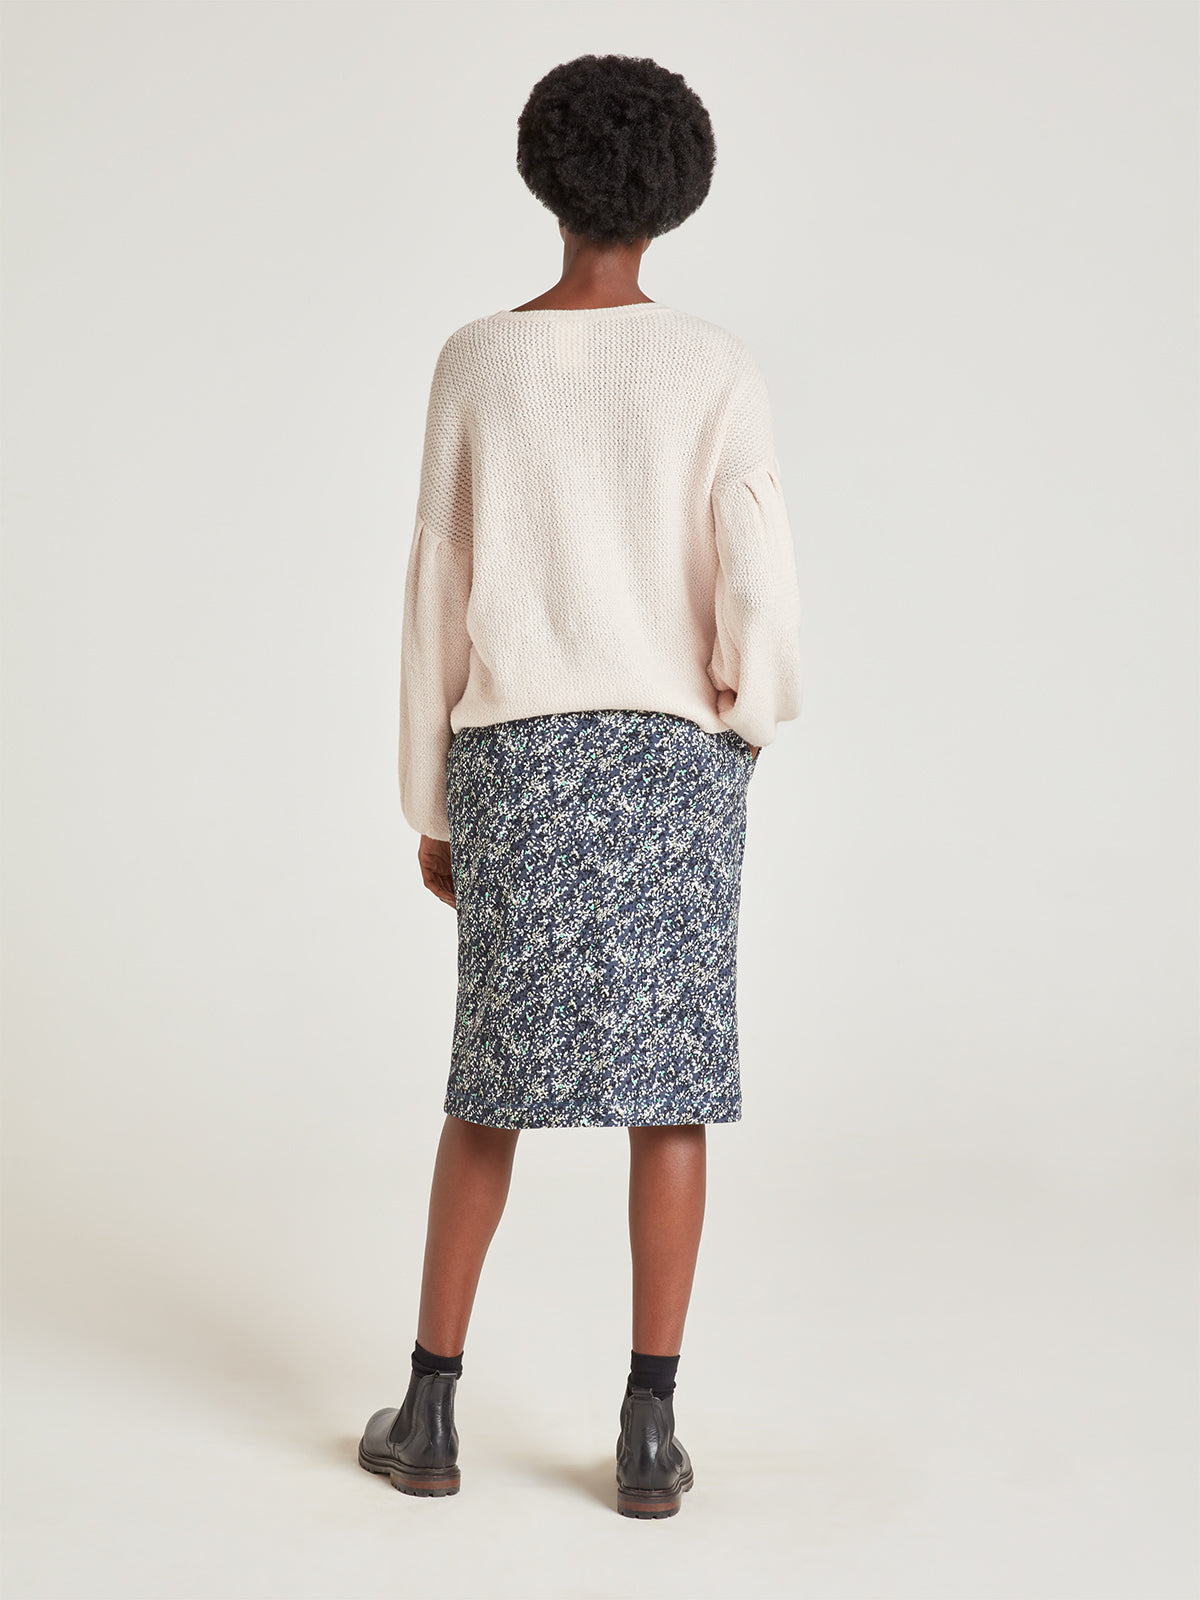 Colette Fairtrade Organic Cotton Skirt - Navy